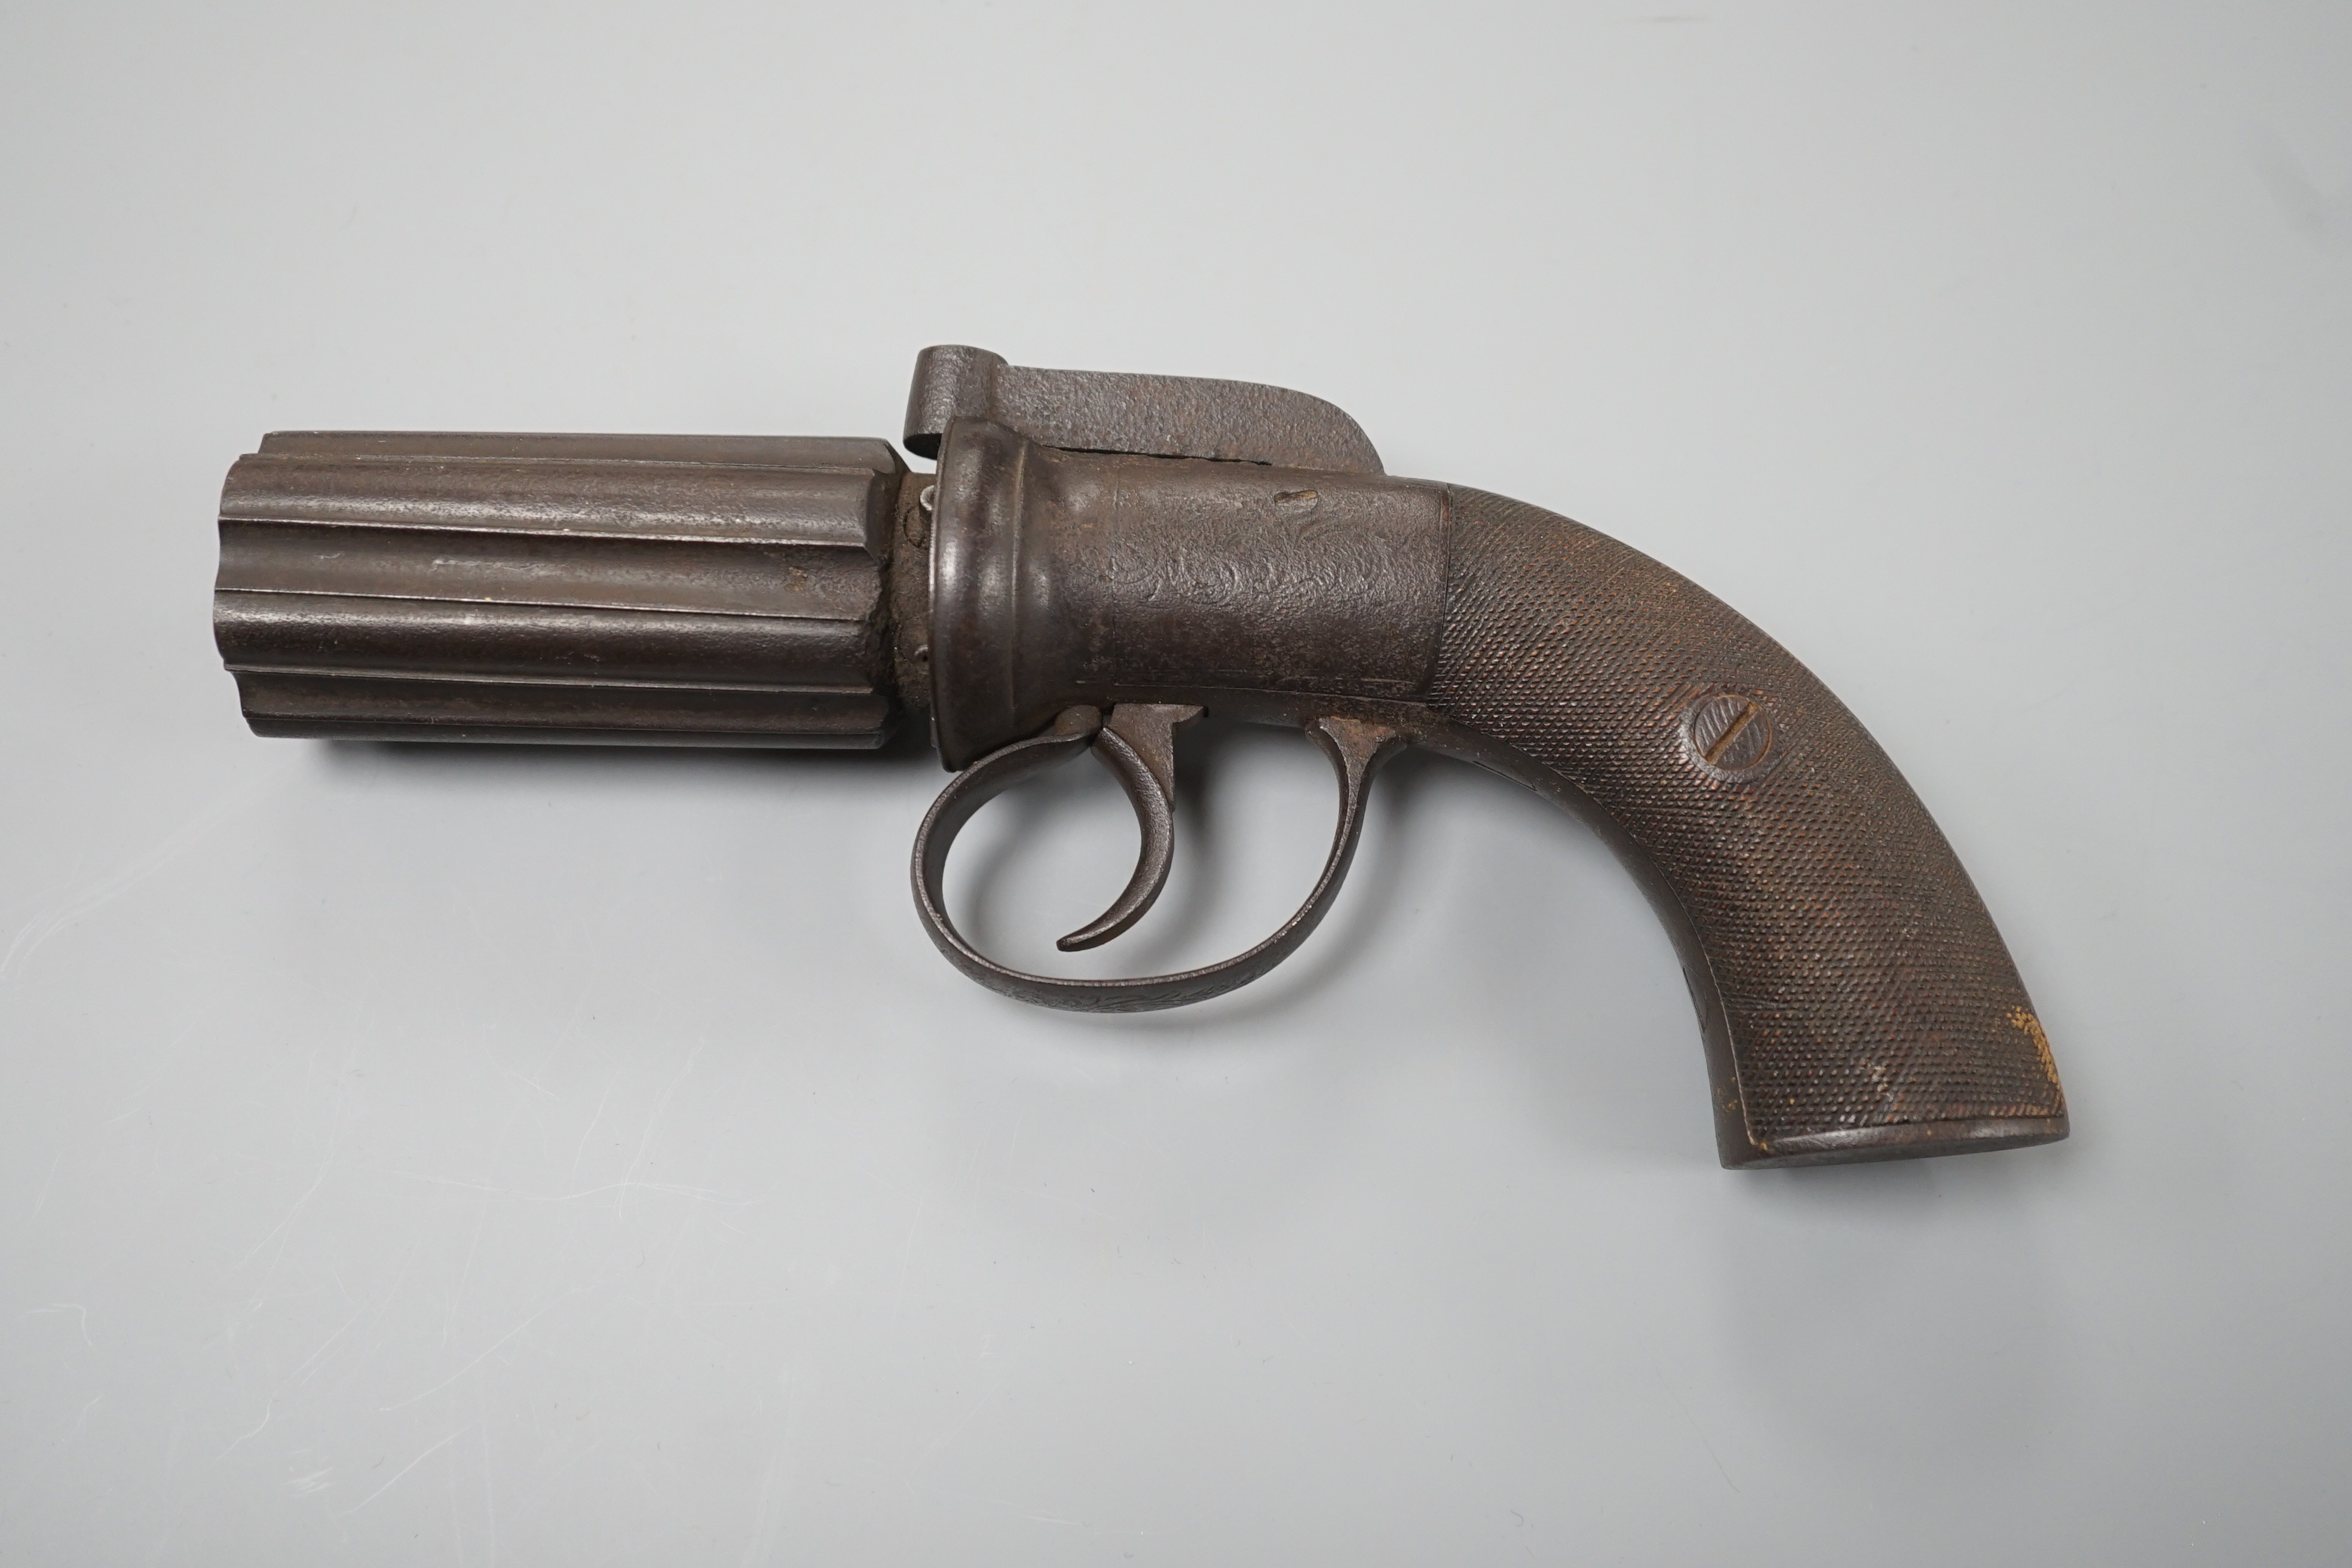 A 19th century unnamed 6 shot bar hammer action pepperbox revolver 3” barrel